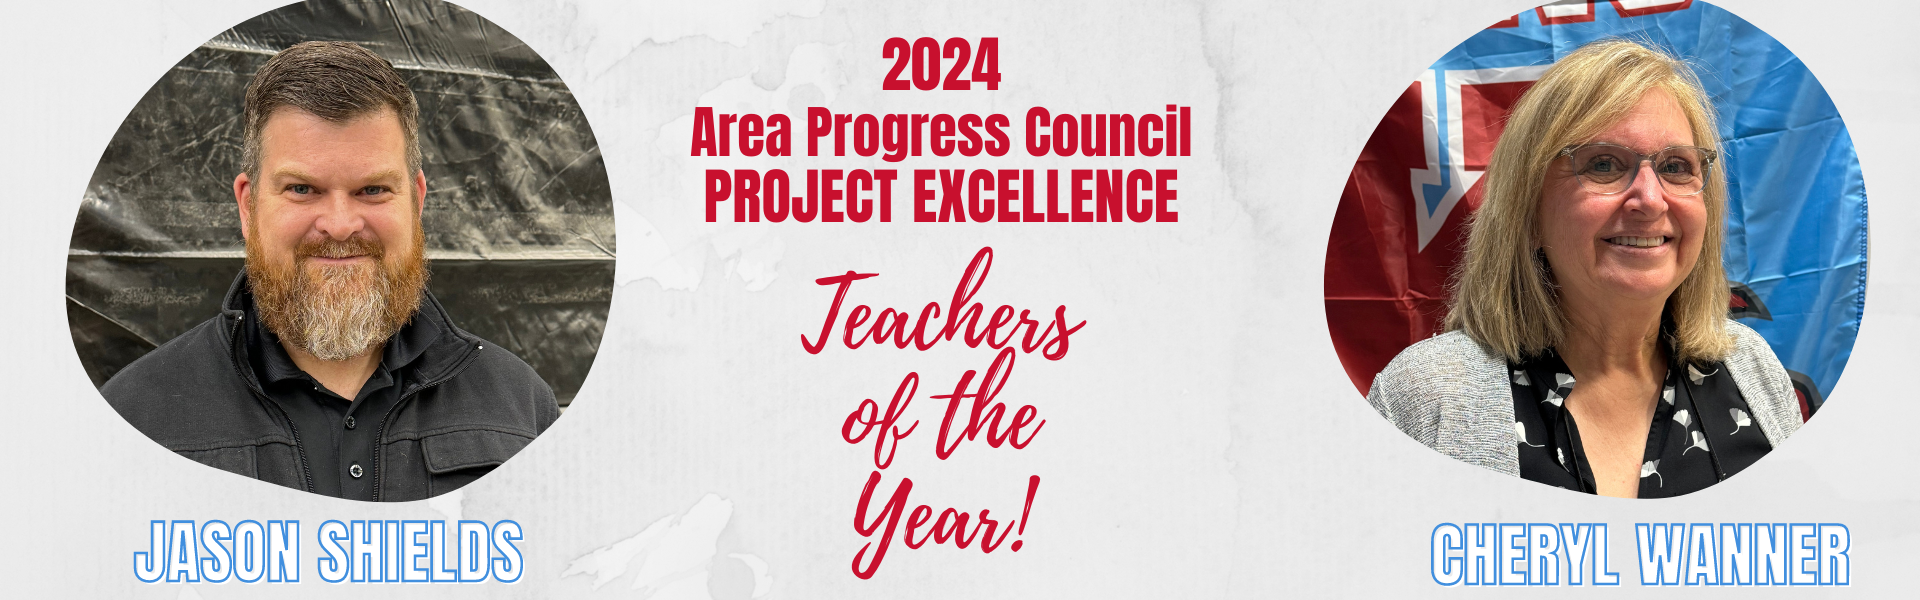 Area Progress Council Teachers of the year 2024 Jason Shields and Cheryl Wanner